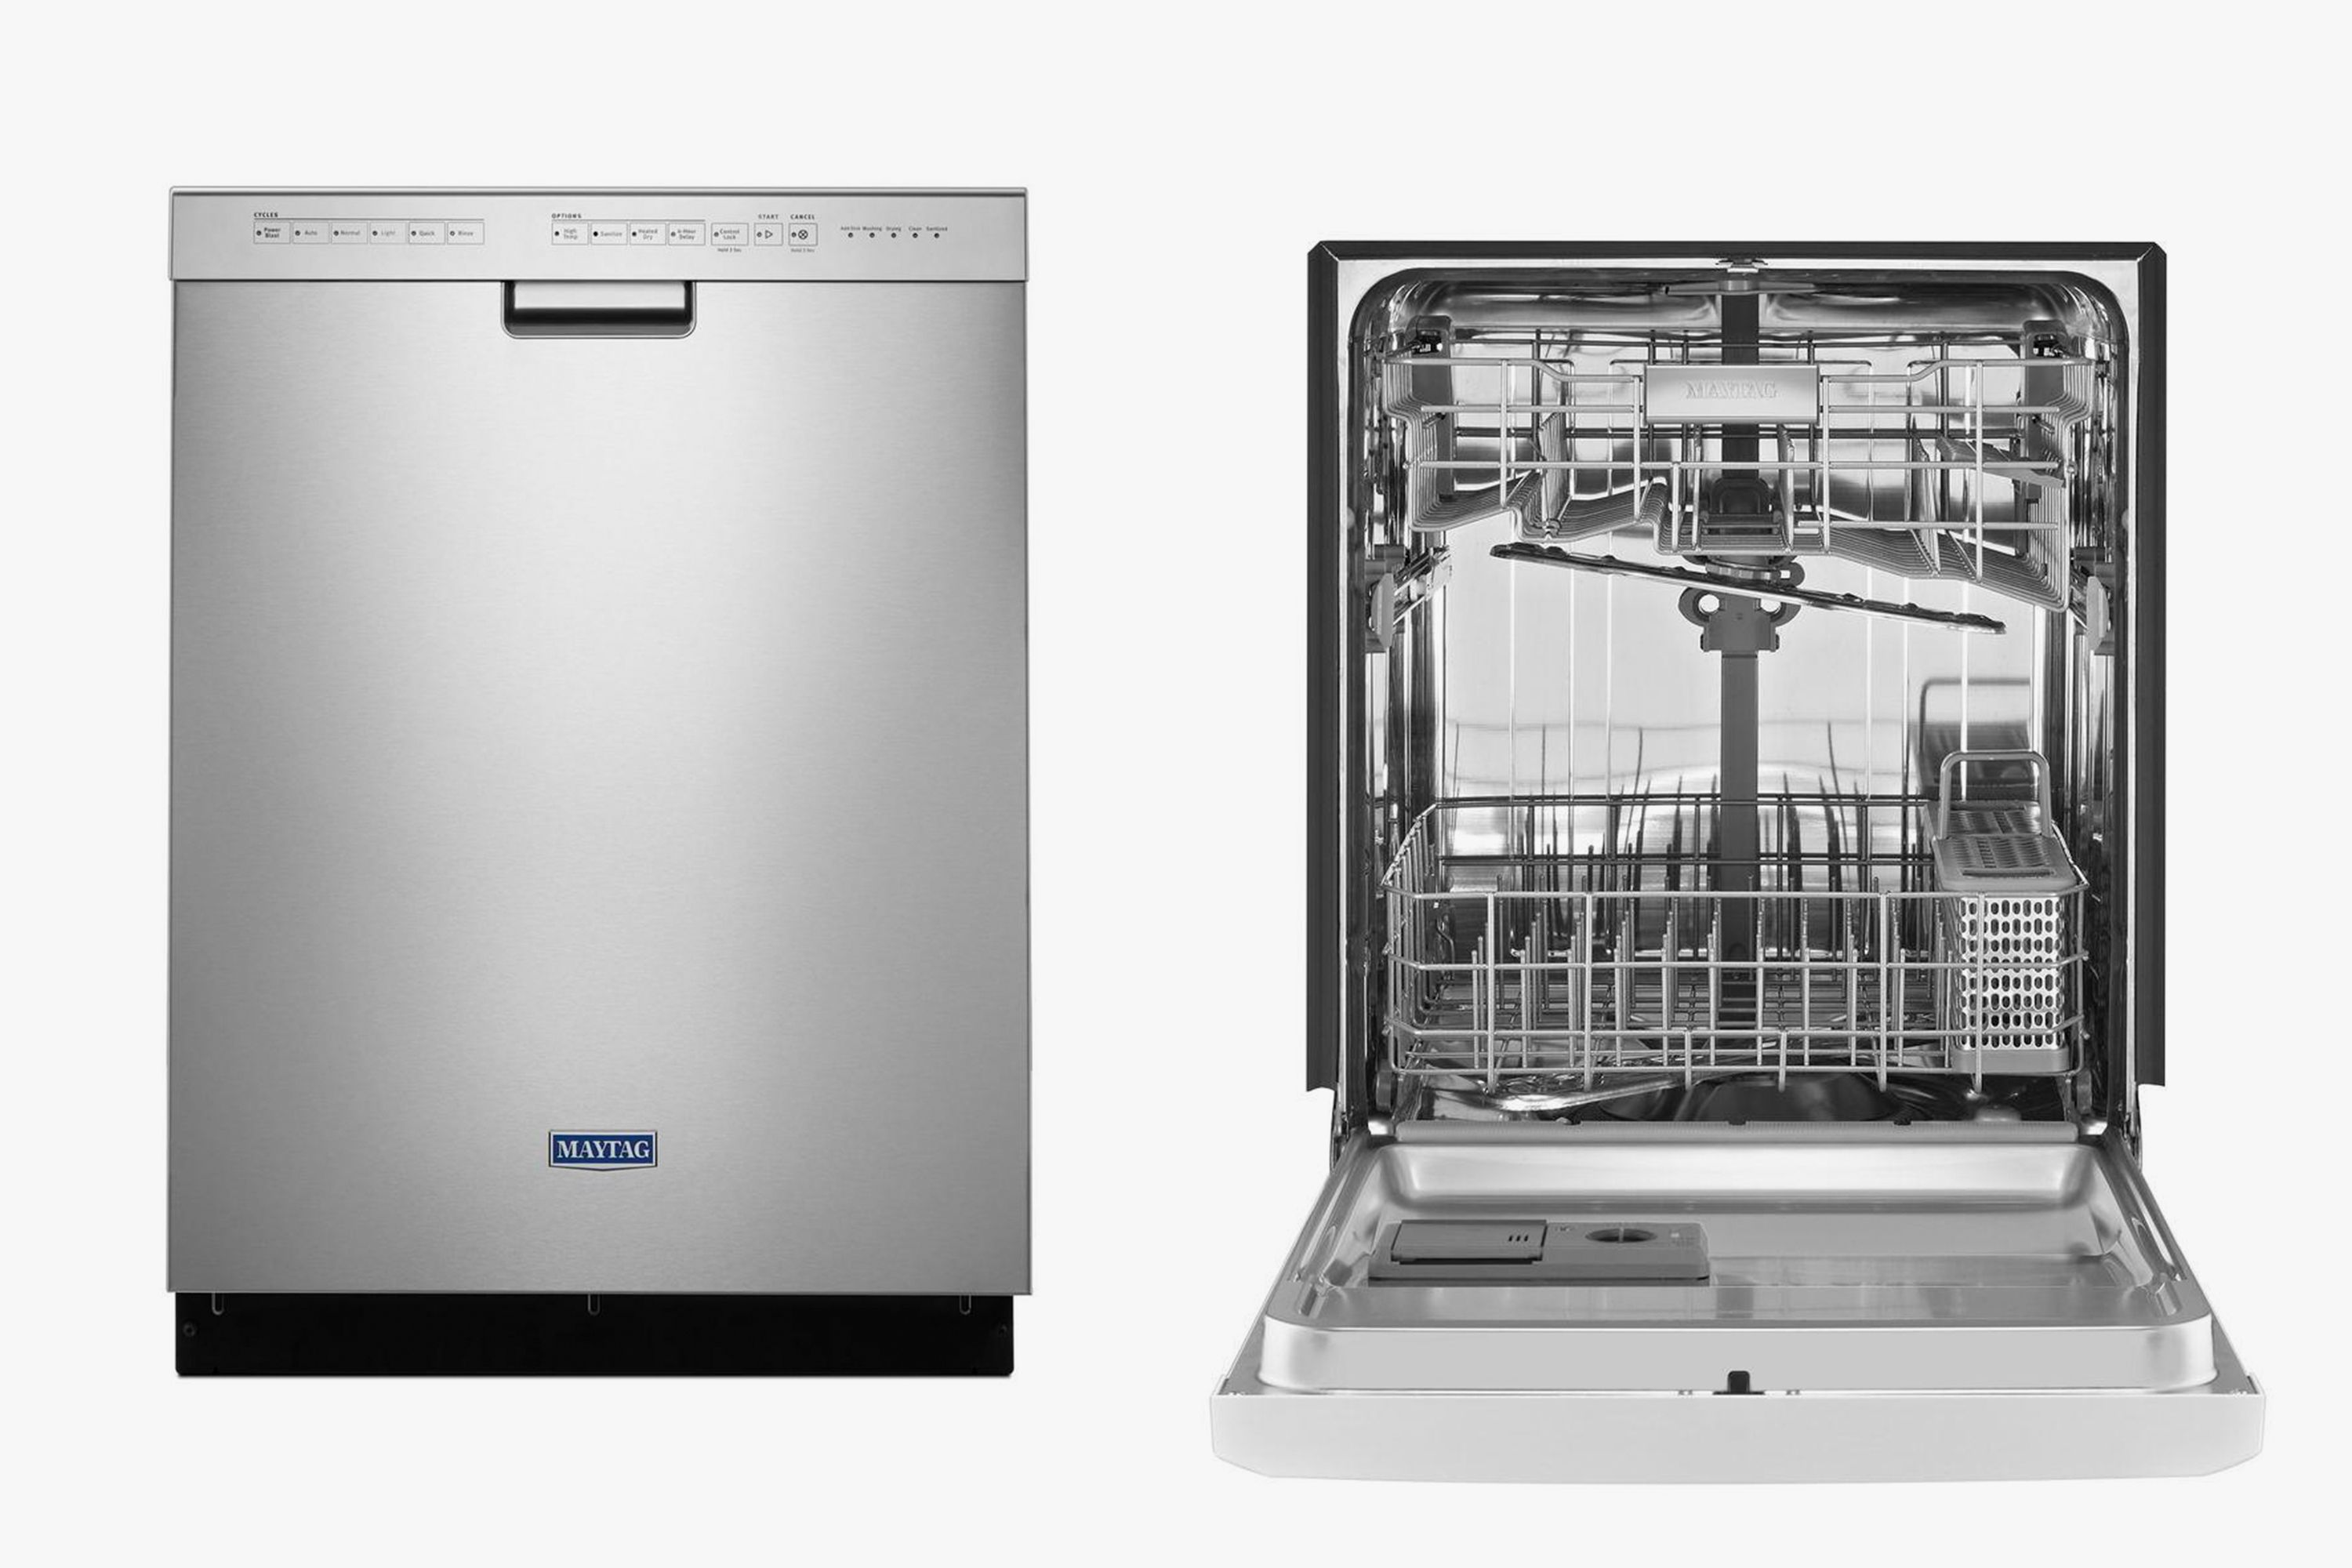 top dishwashers 2016